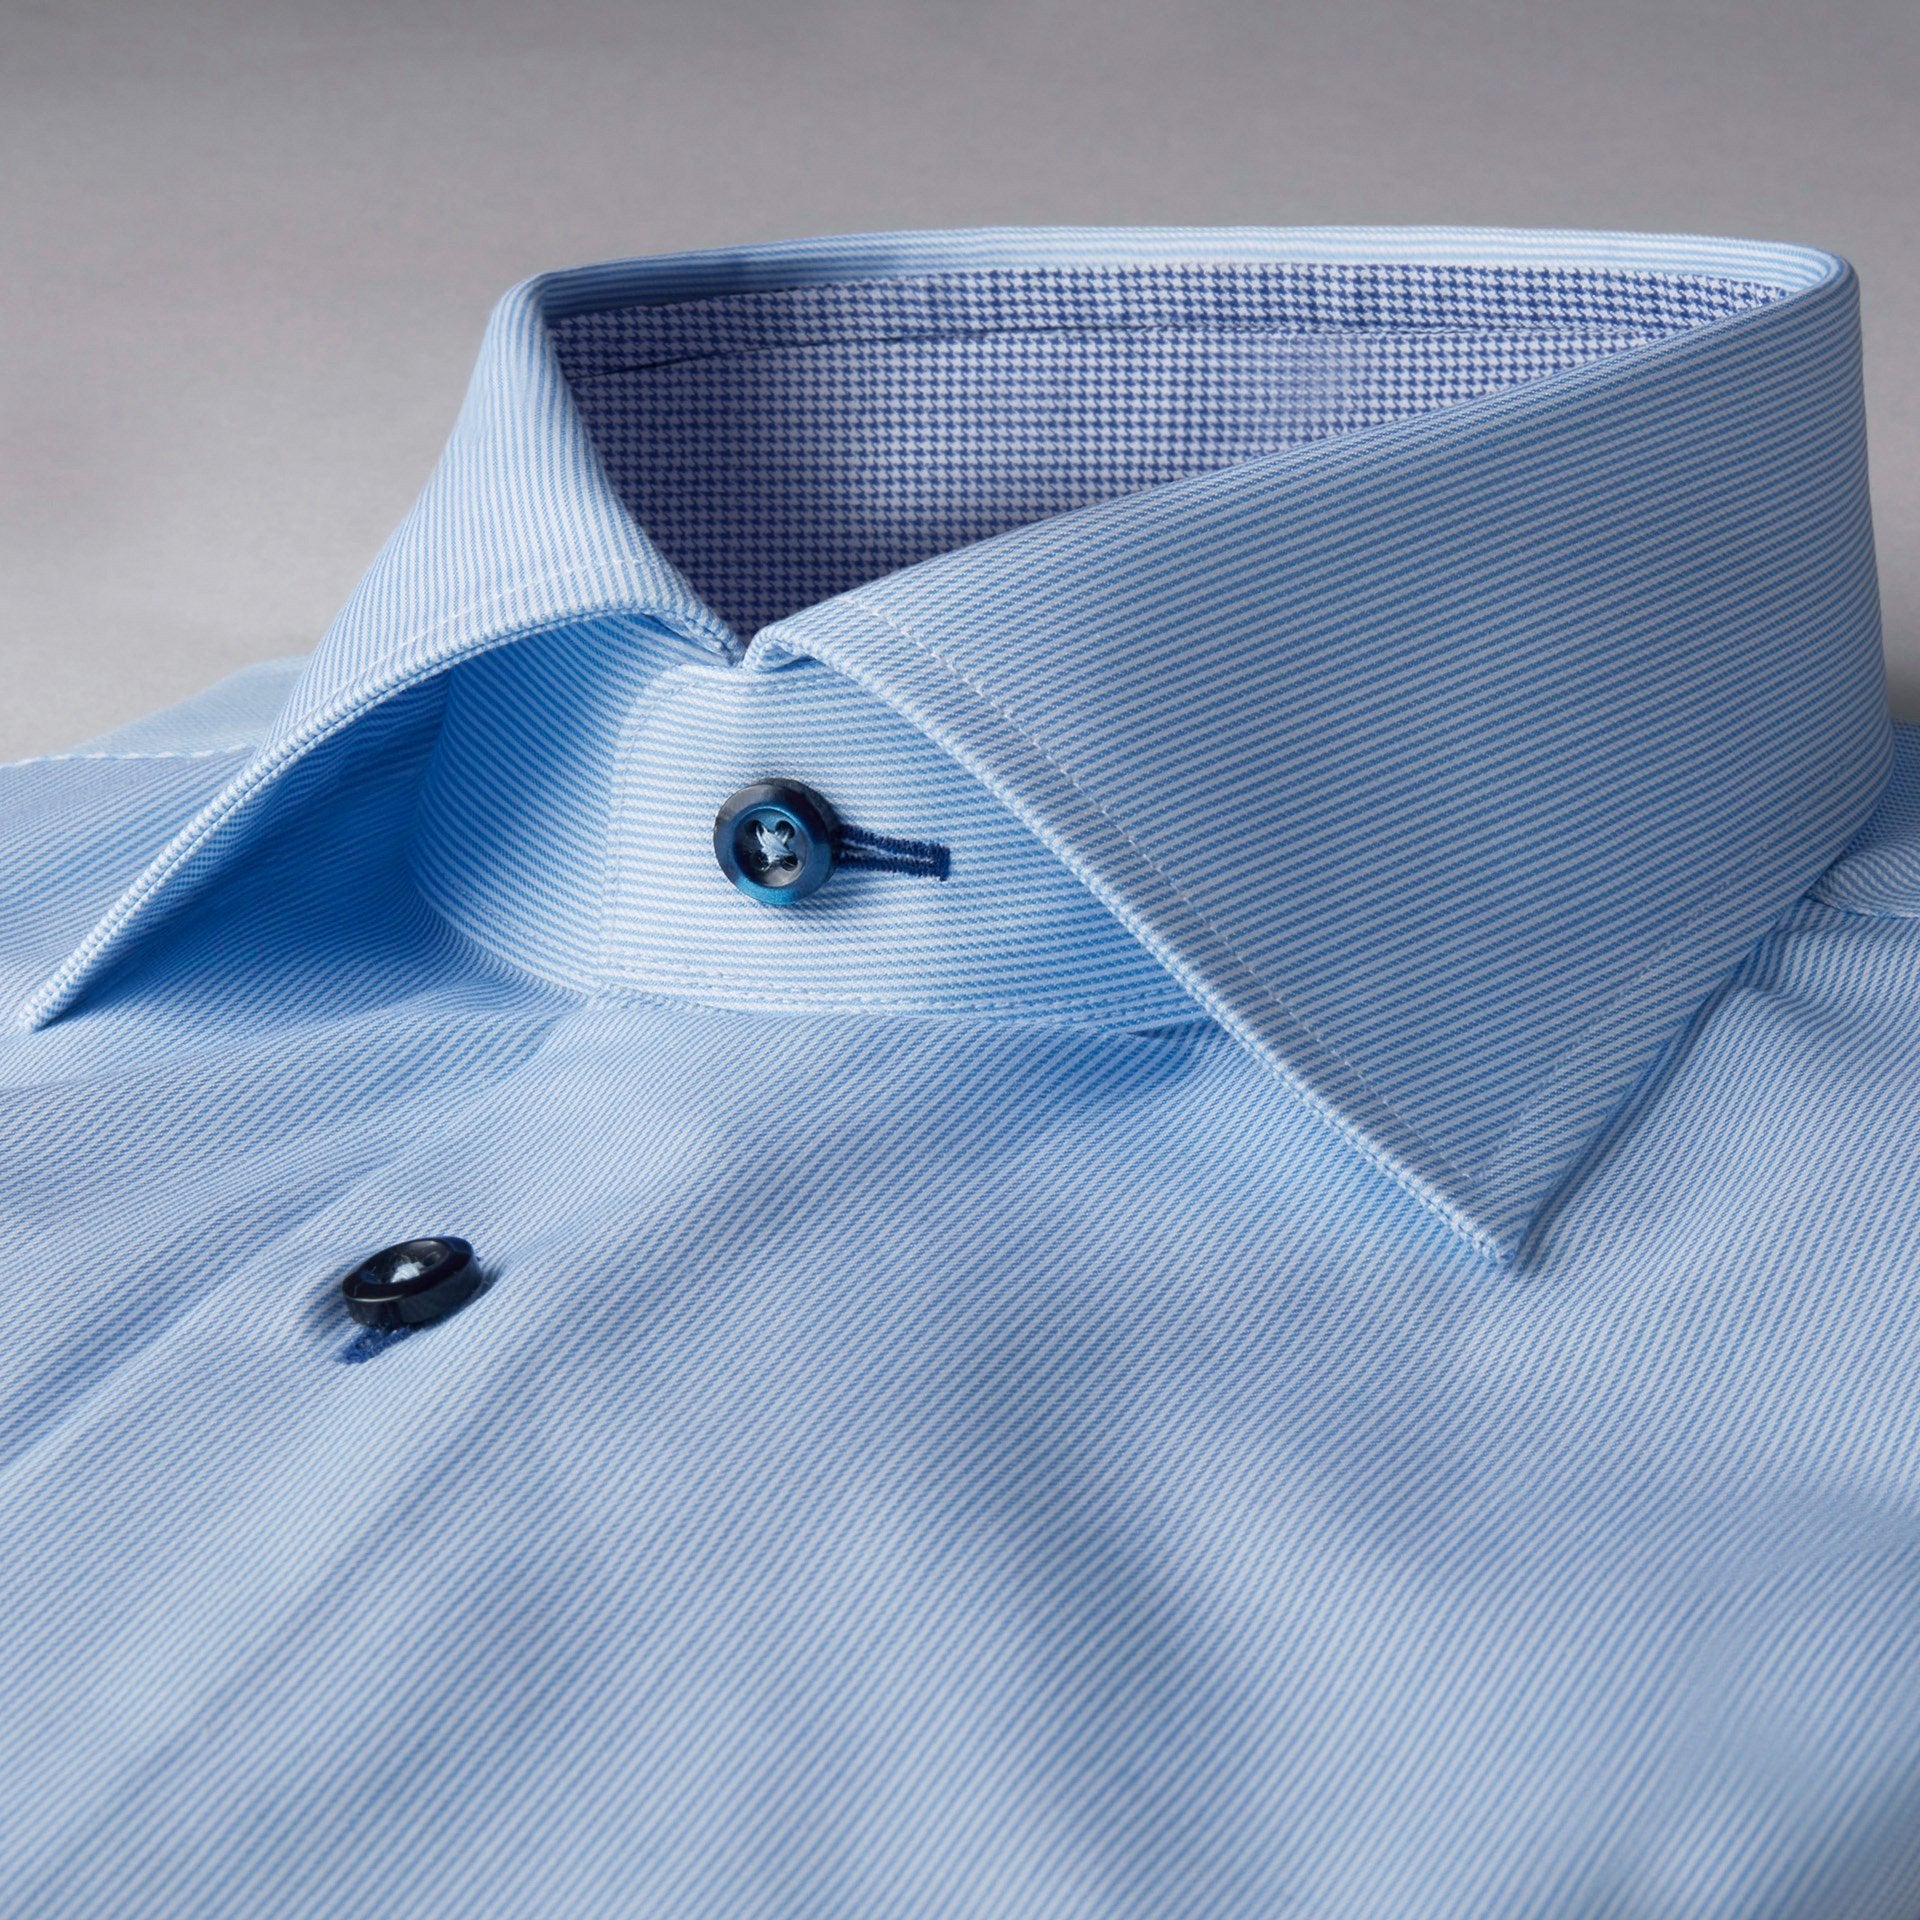 Stenstroms Blue Striped SLIMLINE Shirt With Contrast Details